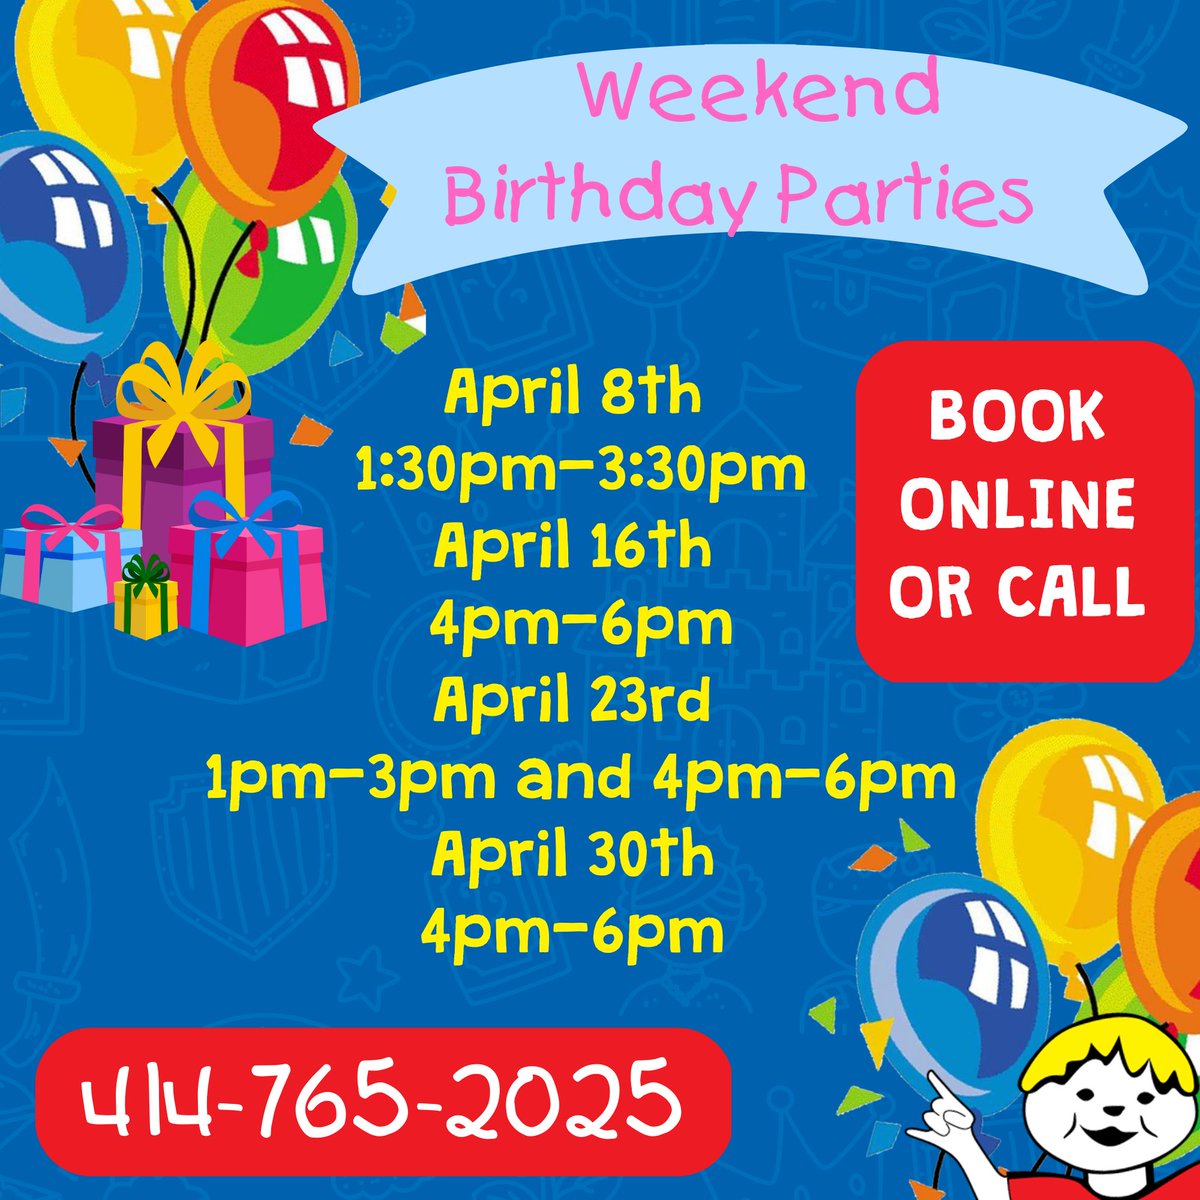 CALL NOW TO BOOK YOUR WEEKEND BIRTHDAY PARTY!
#WRTS_Milwaukee #milwaukee #birthdays #Party #kidsgym #play #sensorygym #mom #dad #happybirthday #indoorgym